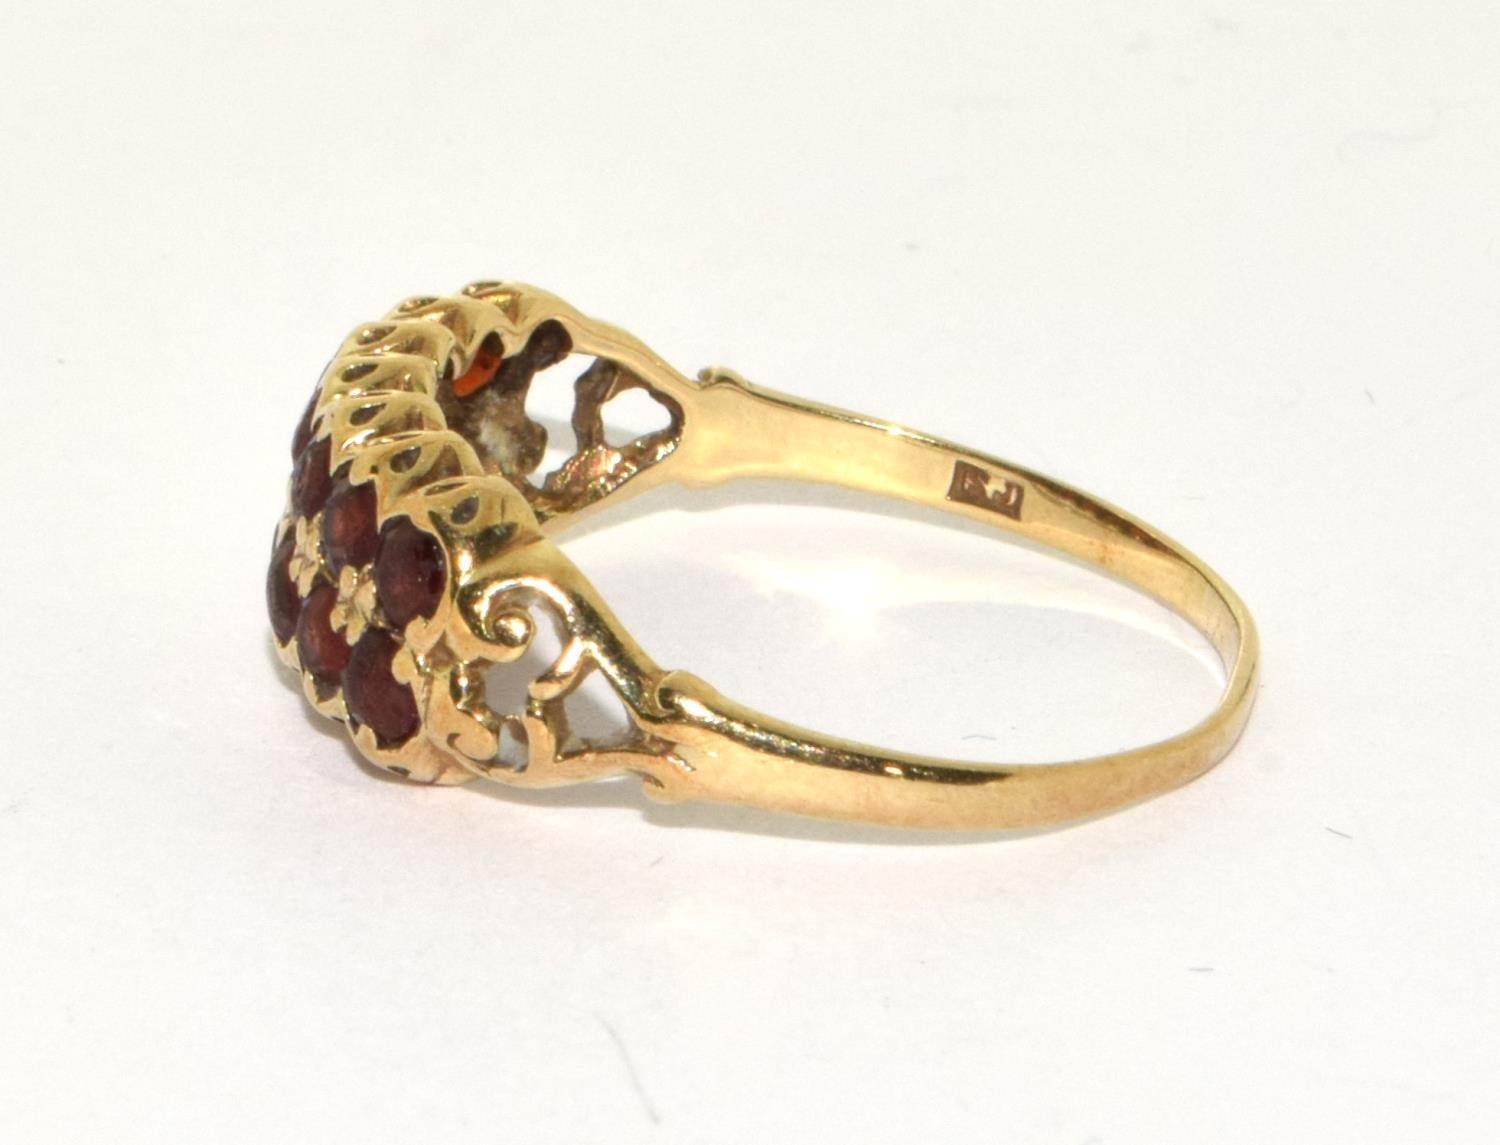 9ct gold ladies twin bar antique set garnet ring size S - Image 2 of 5